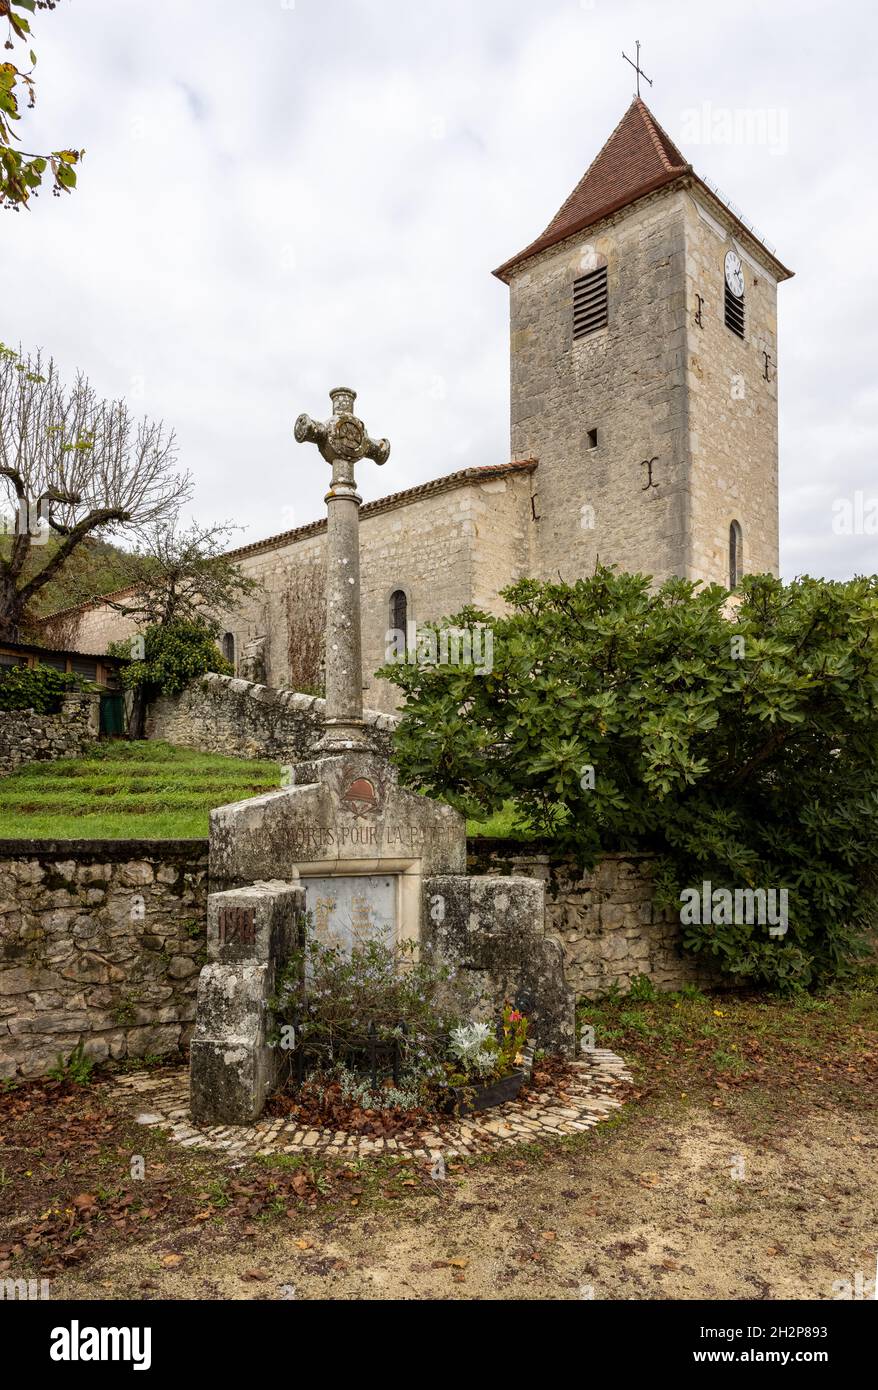 Village church and war memorial, Sauliac-sur-Cele, Lot Department, France Stock Photo